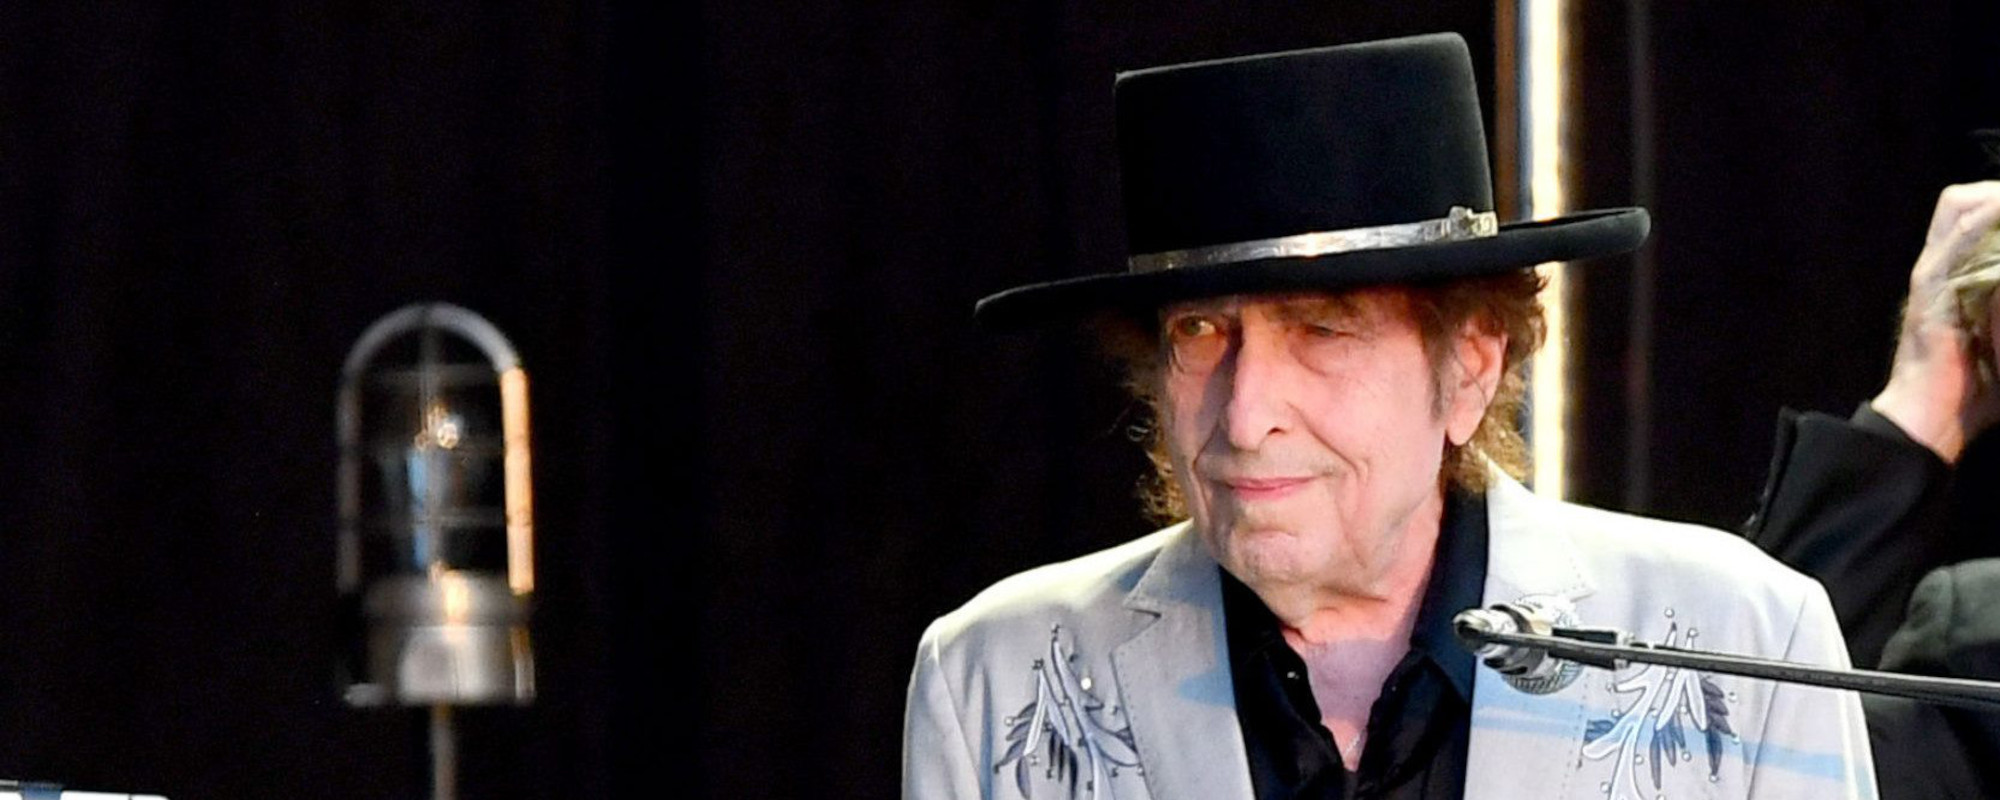 Post Malone on Bob Dylan: “He Kinda Slid Into My DMs”